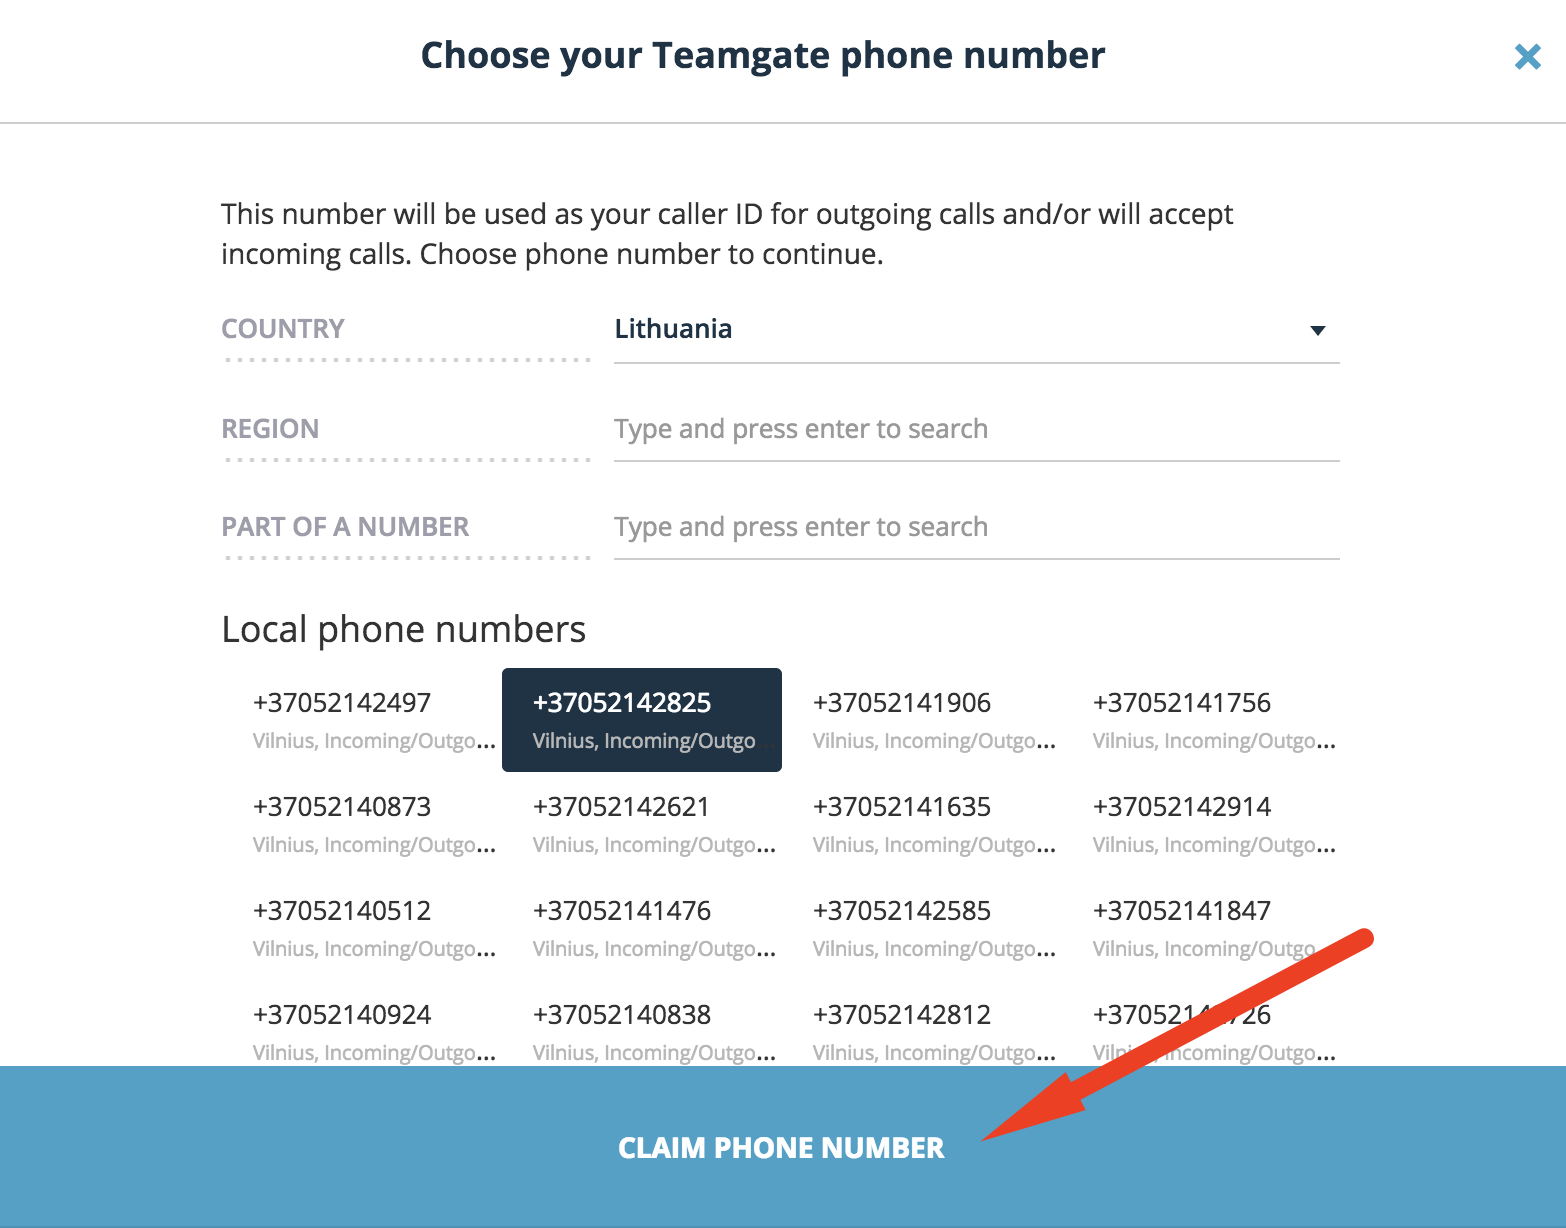 claim-phone-number-teamgate-crm.png